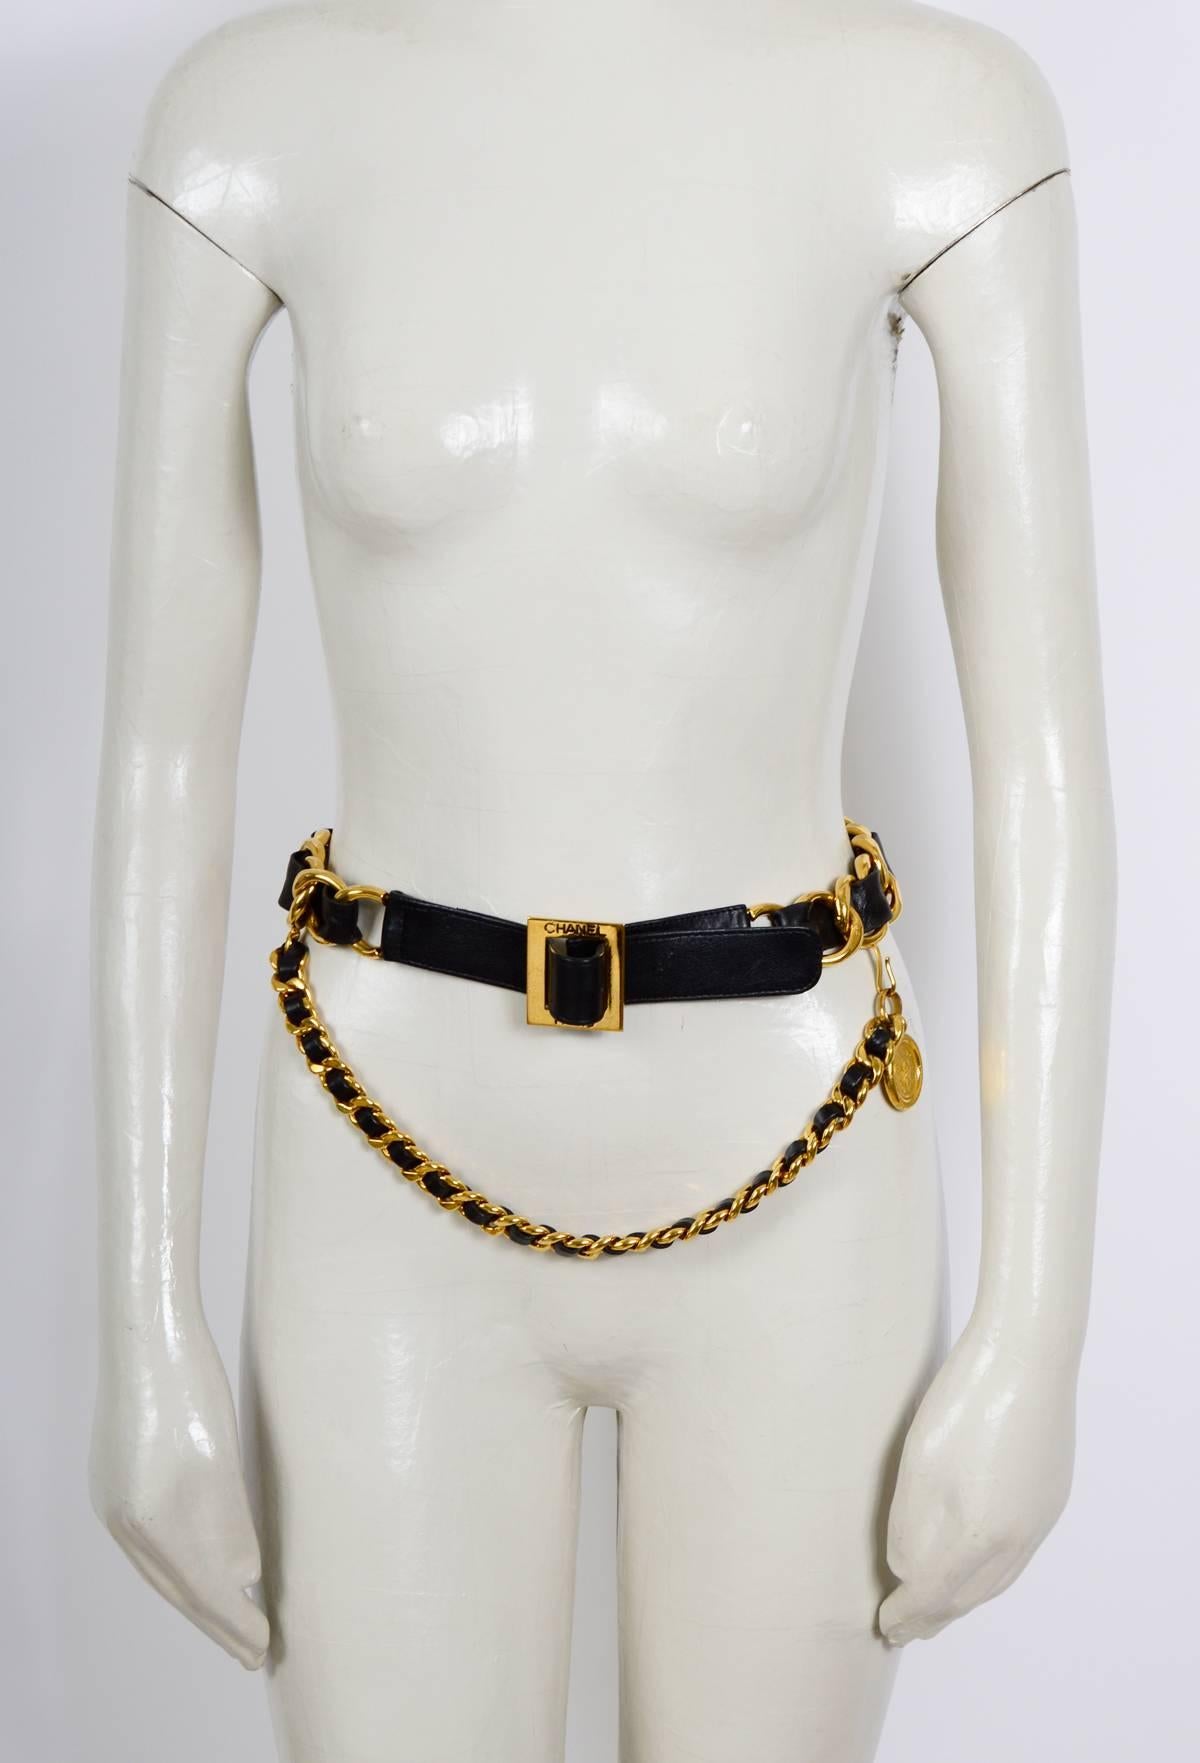 chanel chain belt 90s